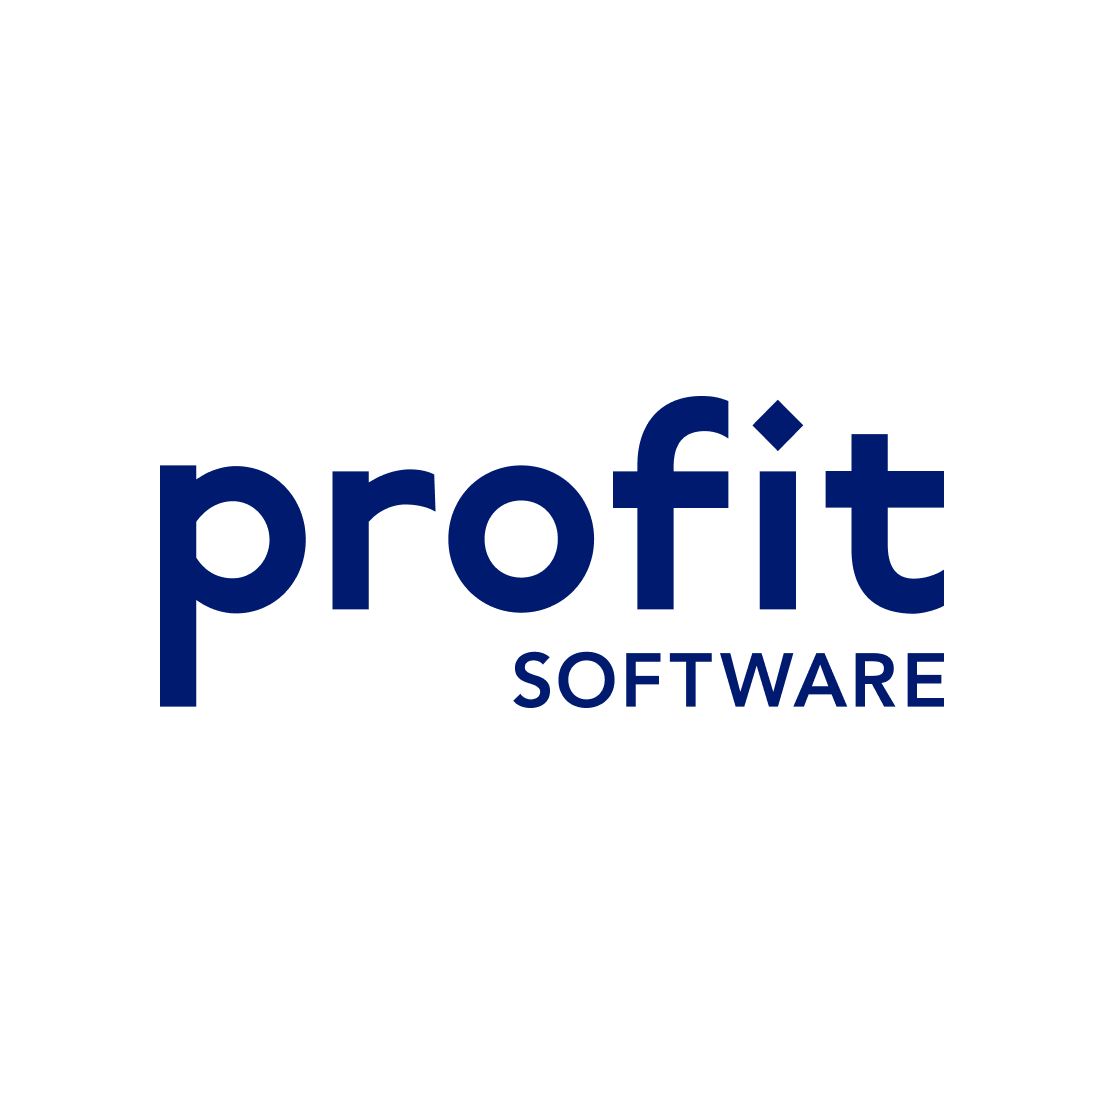 Profit Software